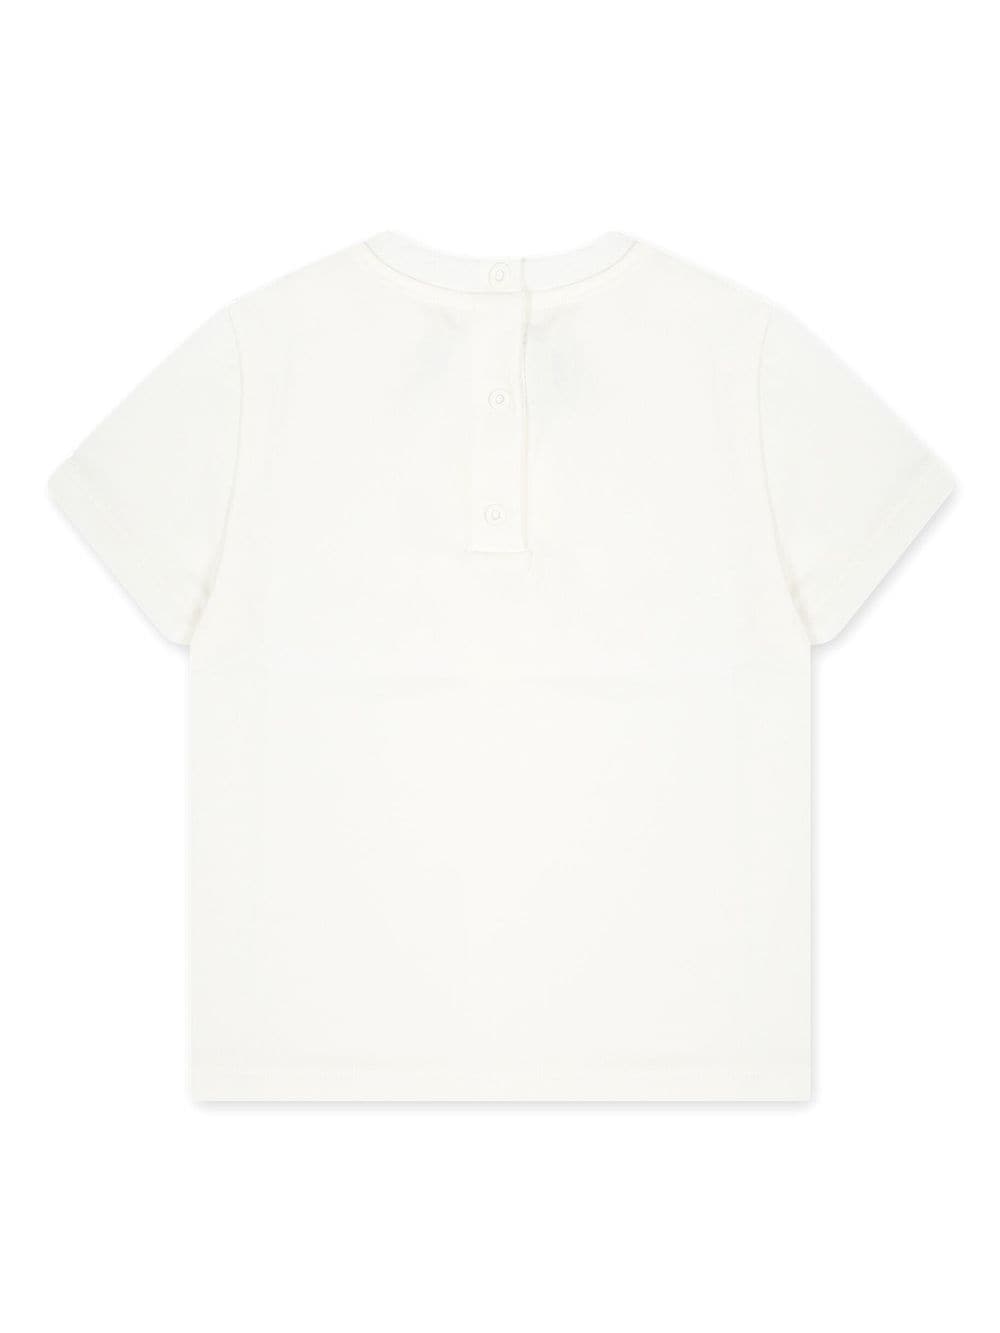 White cotton baby t-shirt